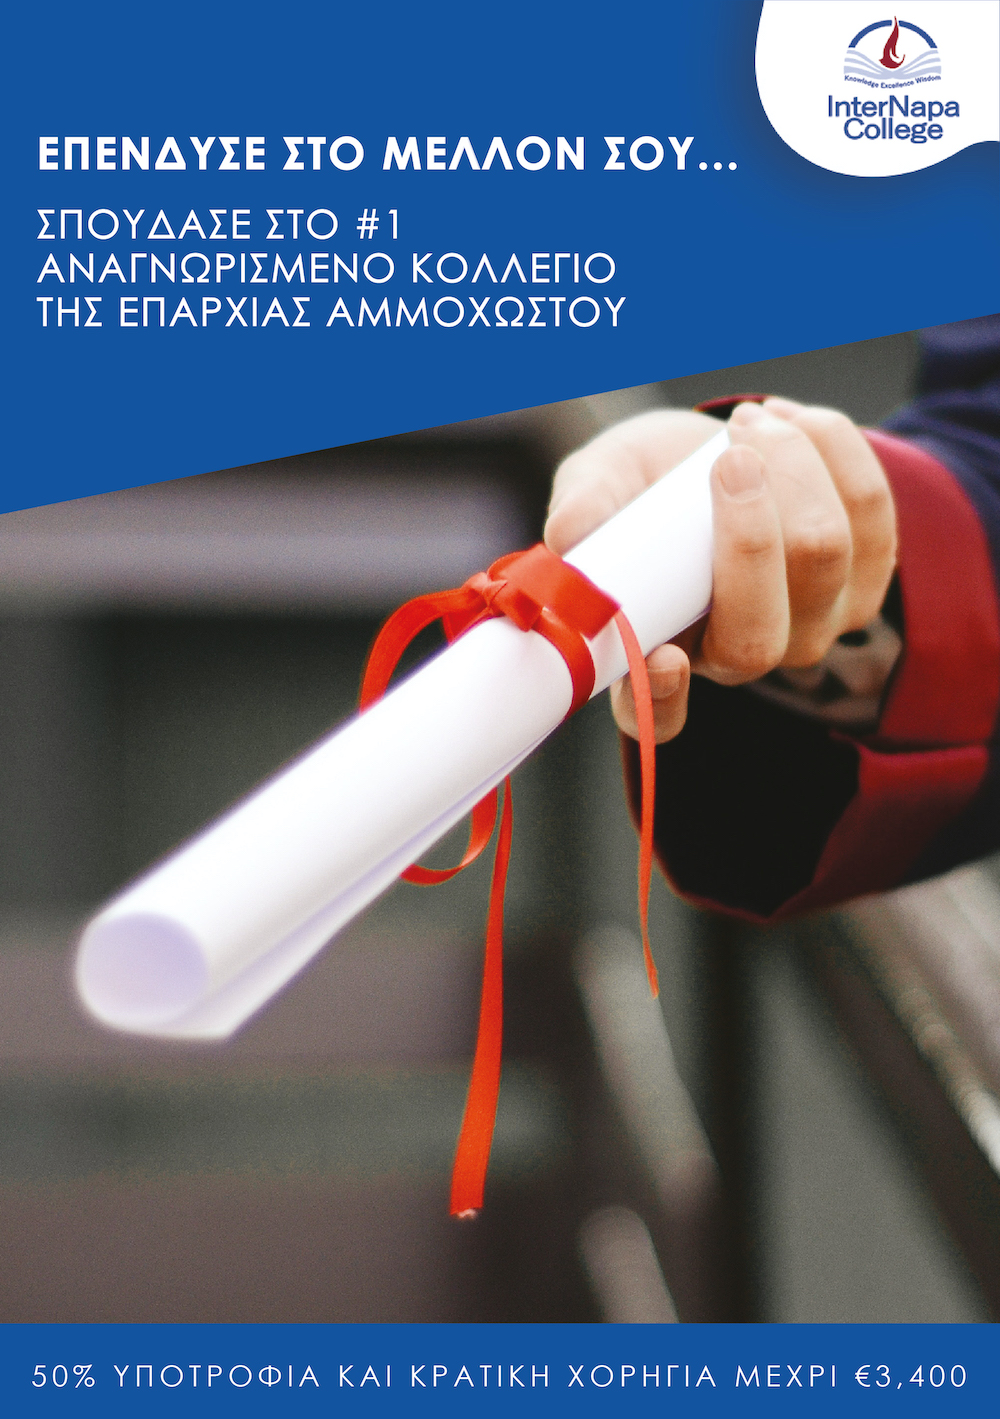 A4LEAFLET GREEK 1 01 01 Advertorial, Internapa College, Εκπαίδευση, σπουδές